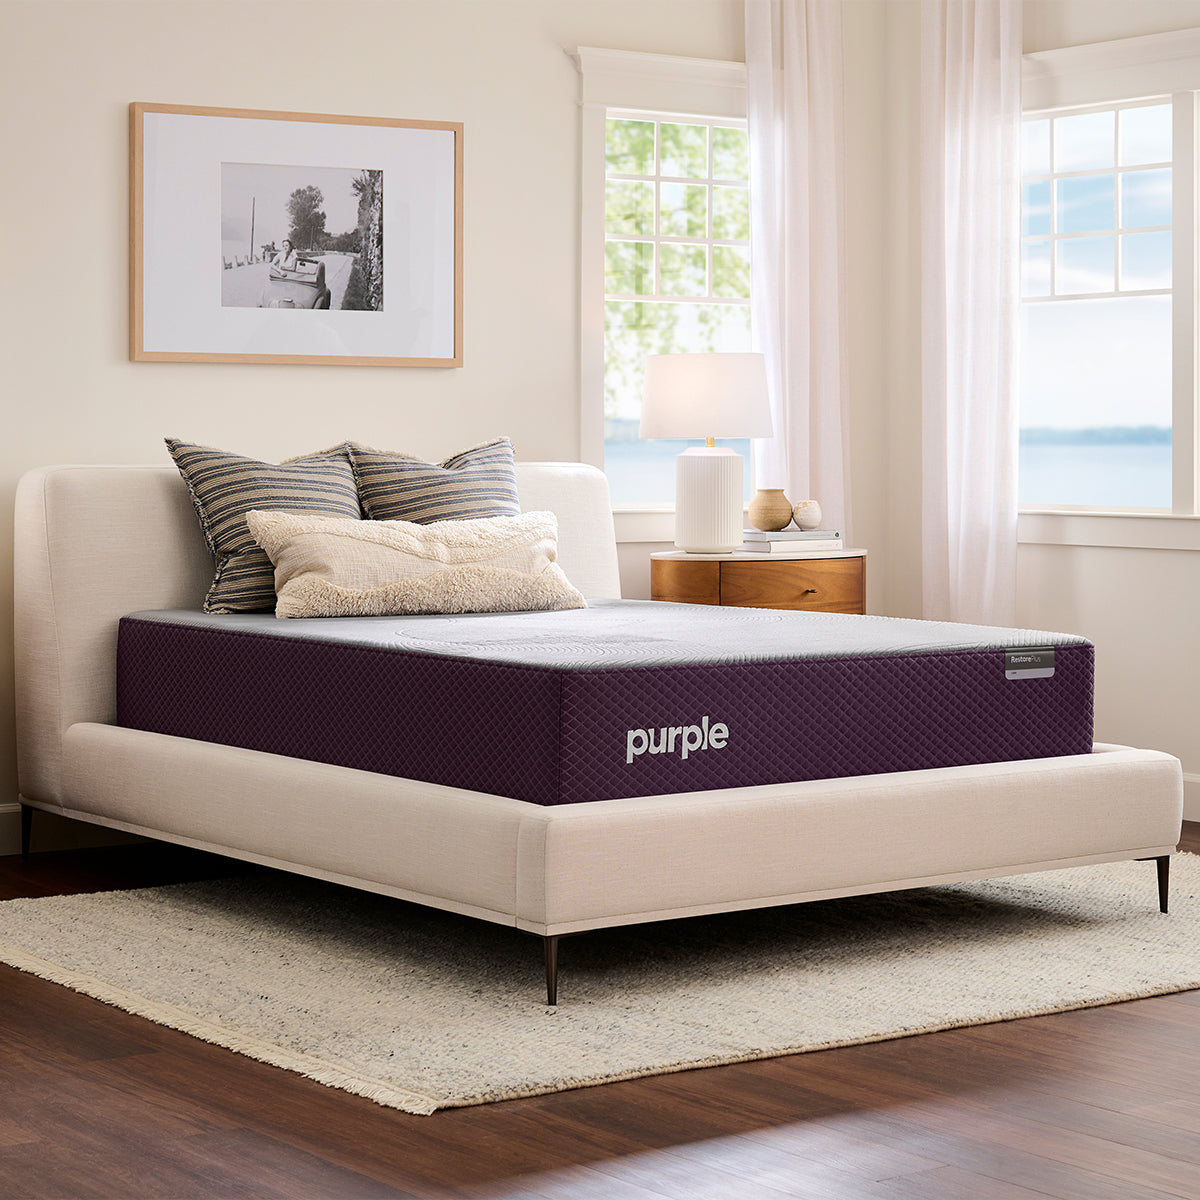 Purple Restore Plus Soft Mattress in bedroom